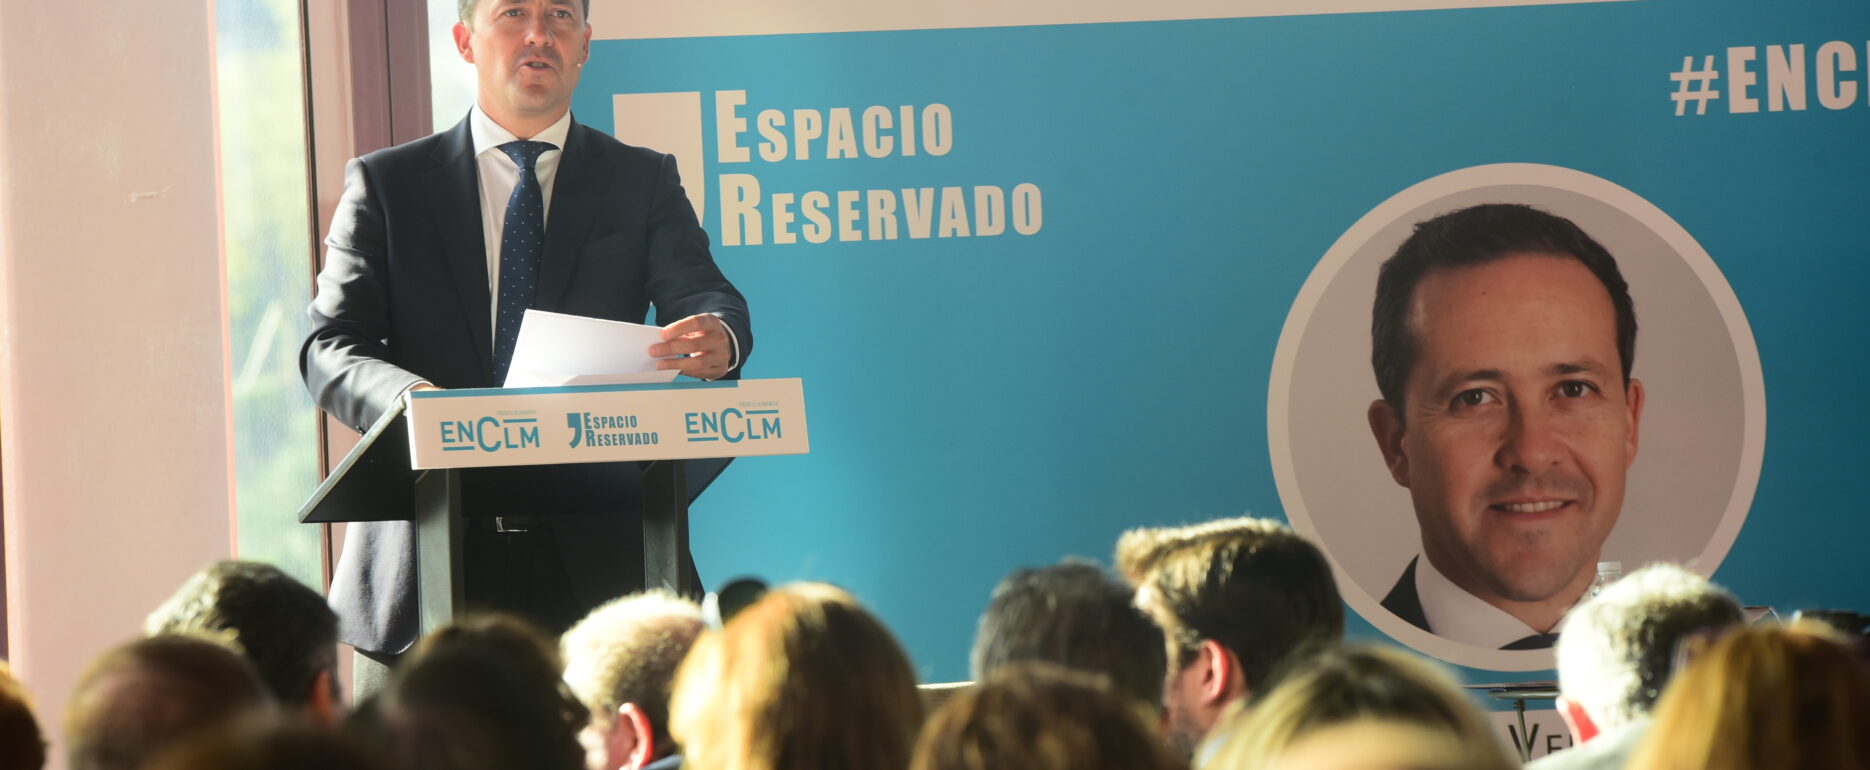 Carlos Velázquez, candidato del PP a la Alcaldía de Toledo. Foto: Rebeca Arango.